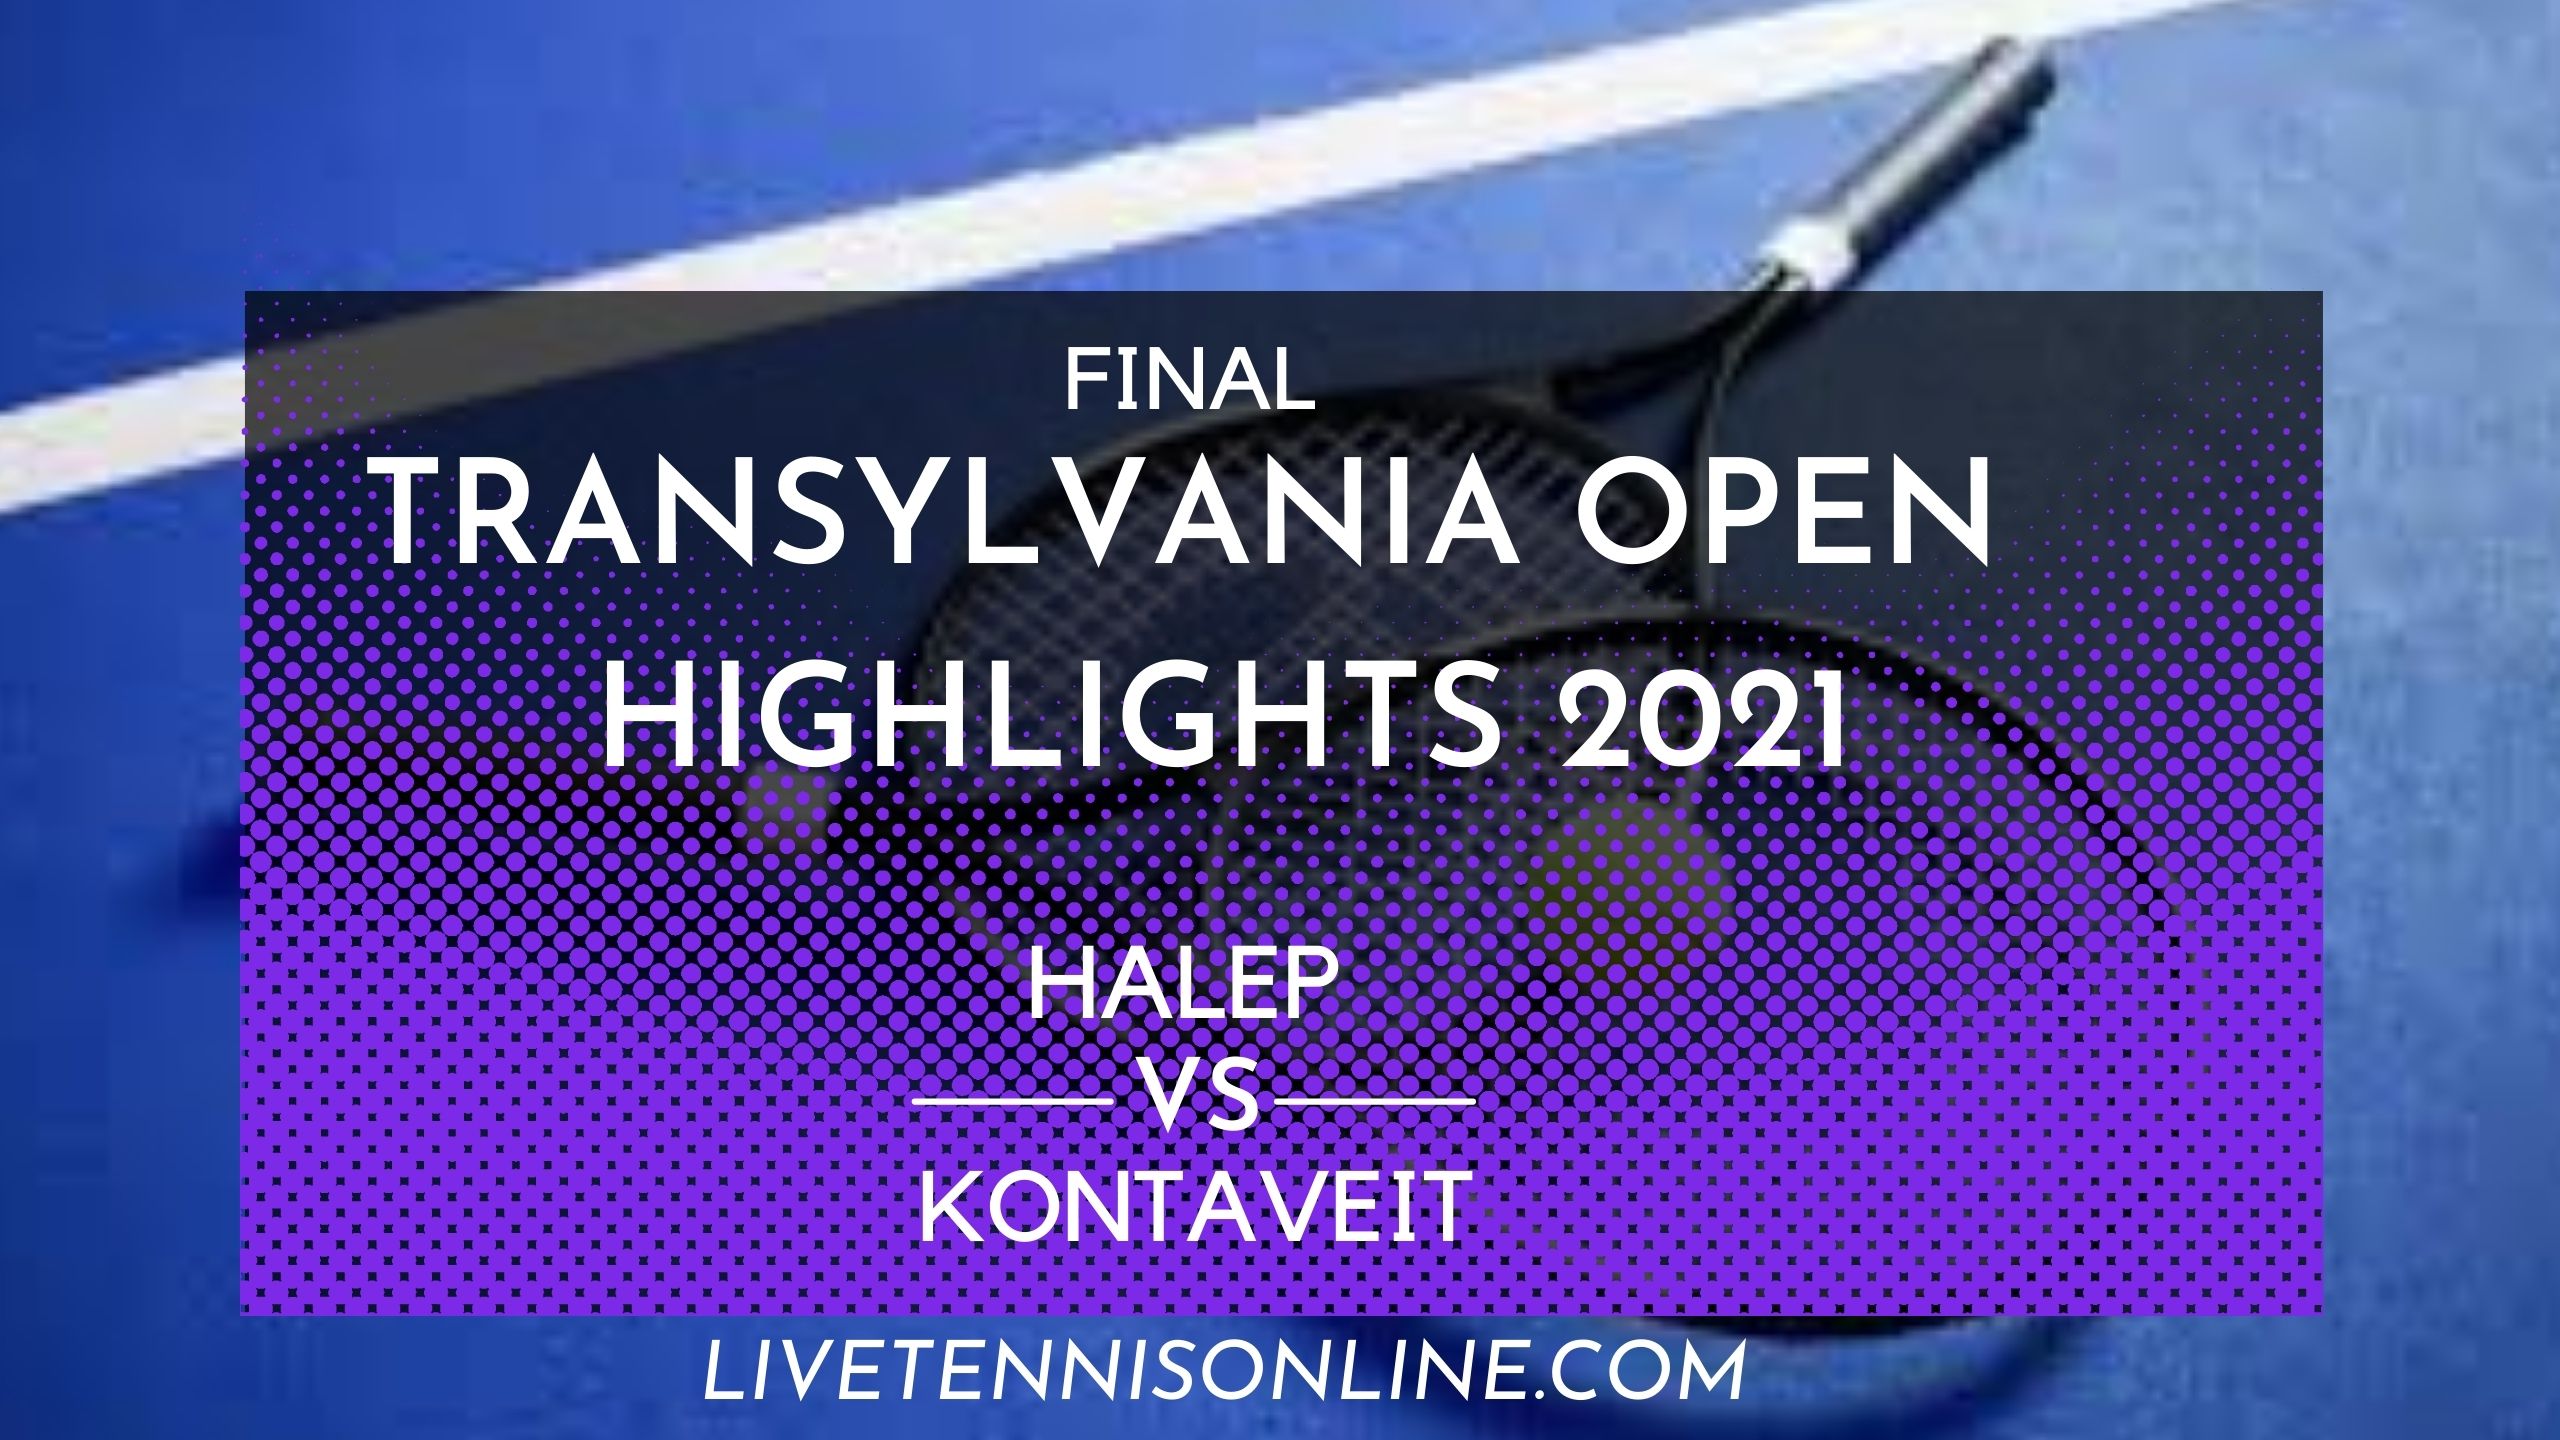 Halep Vs Kontaveit Final Highlights 2021 Transylvania Open